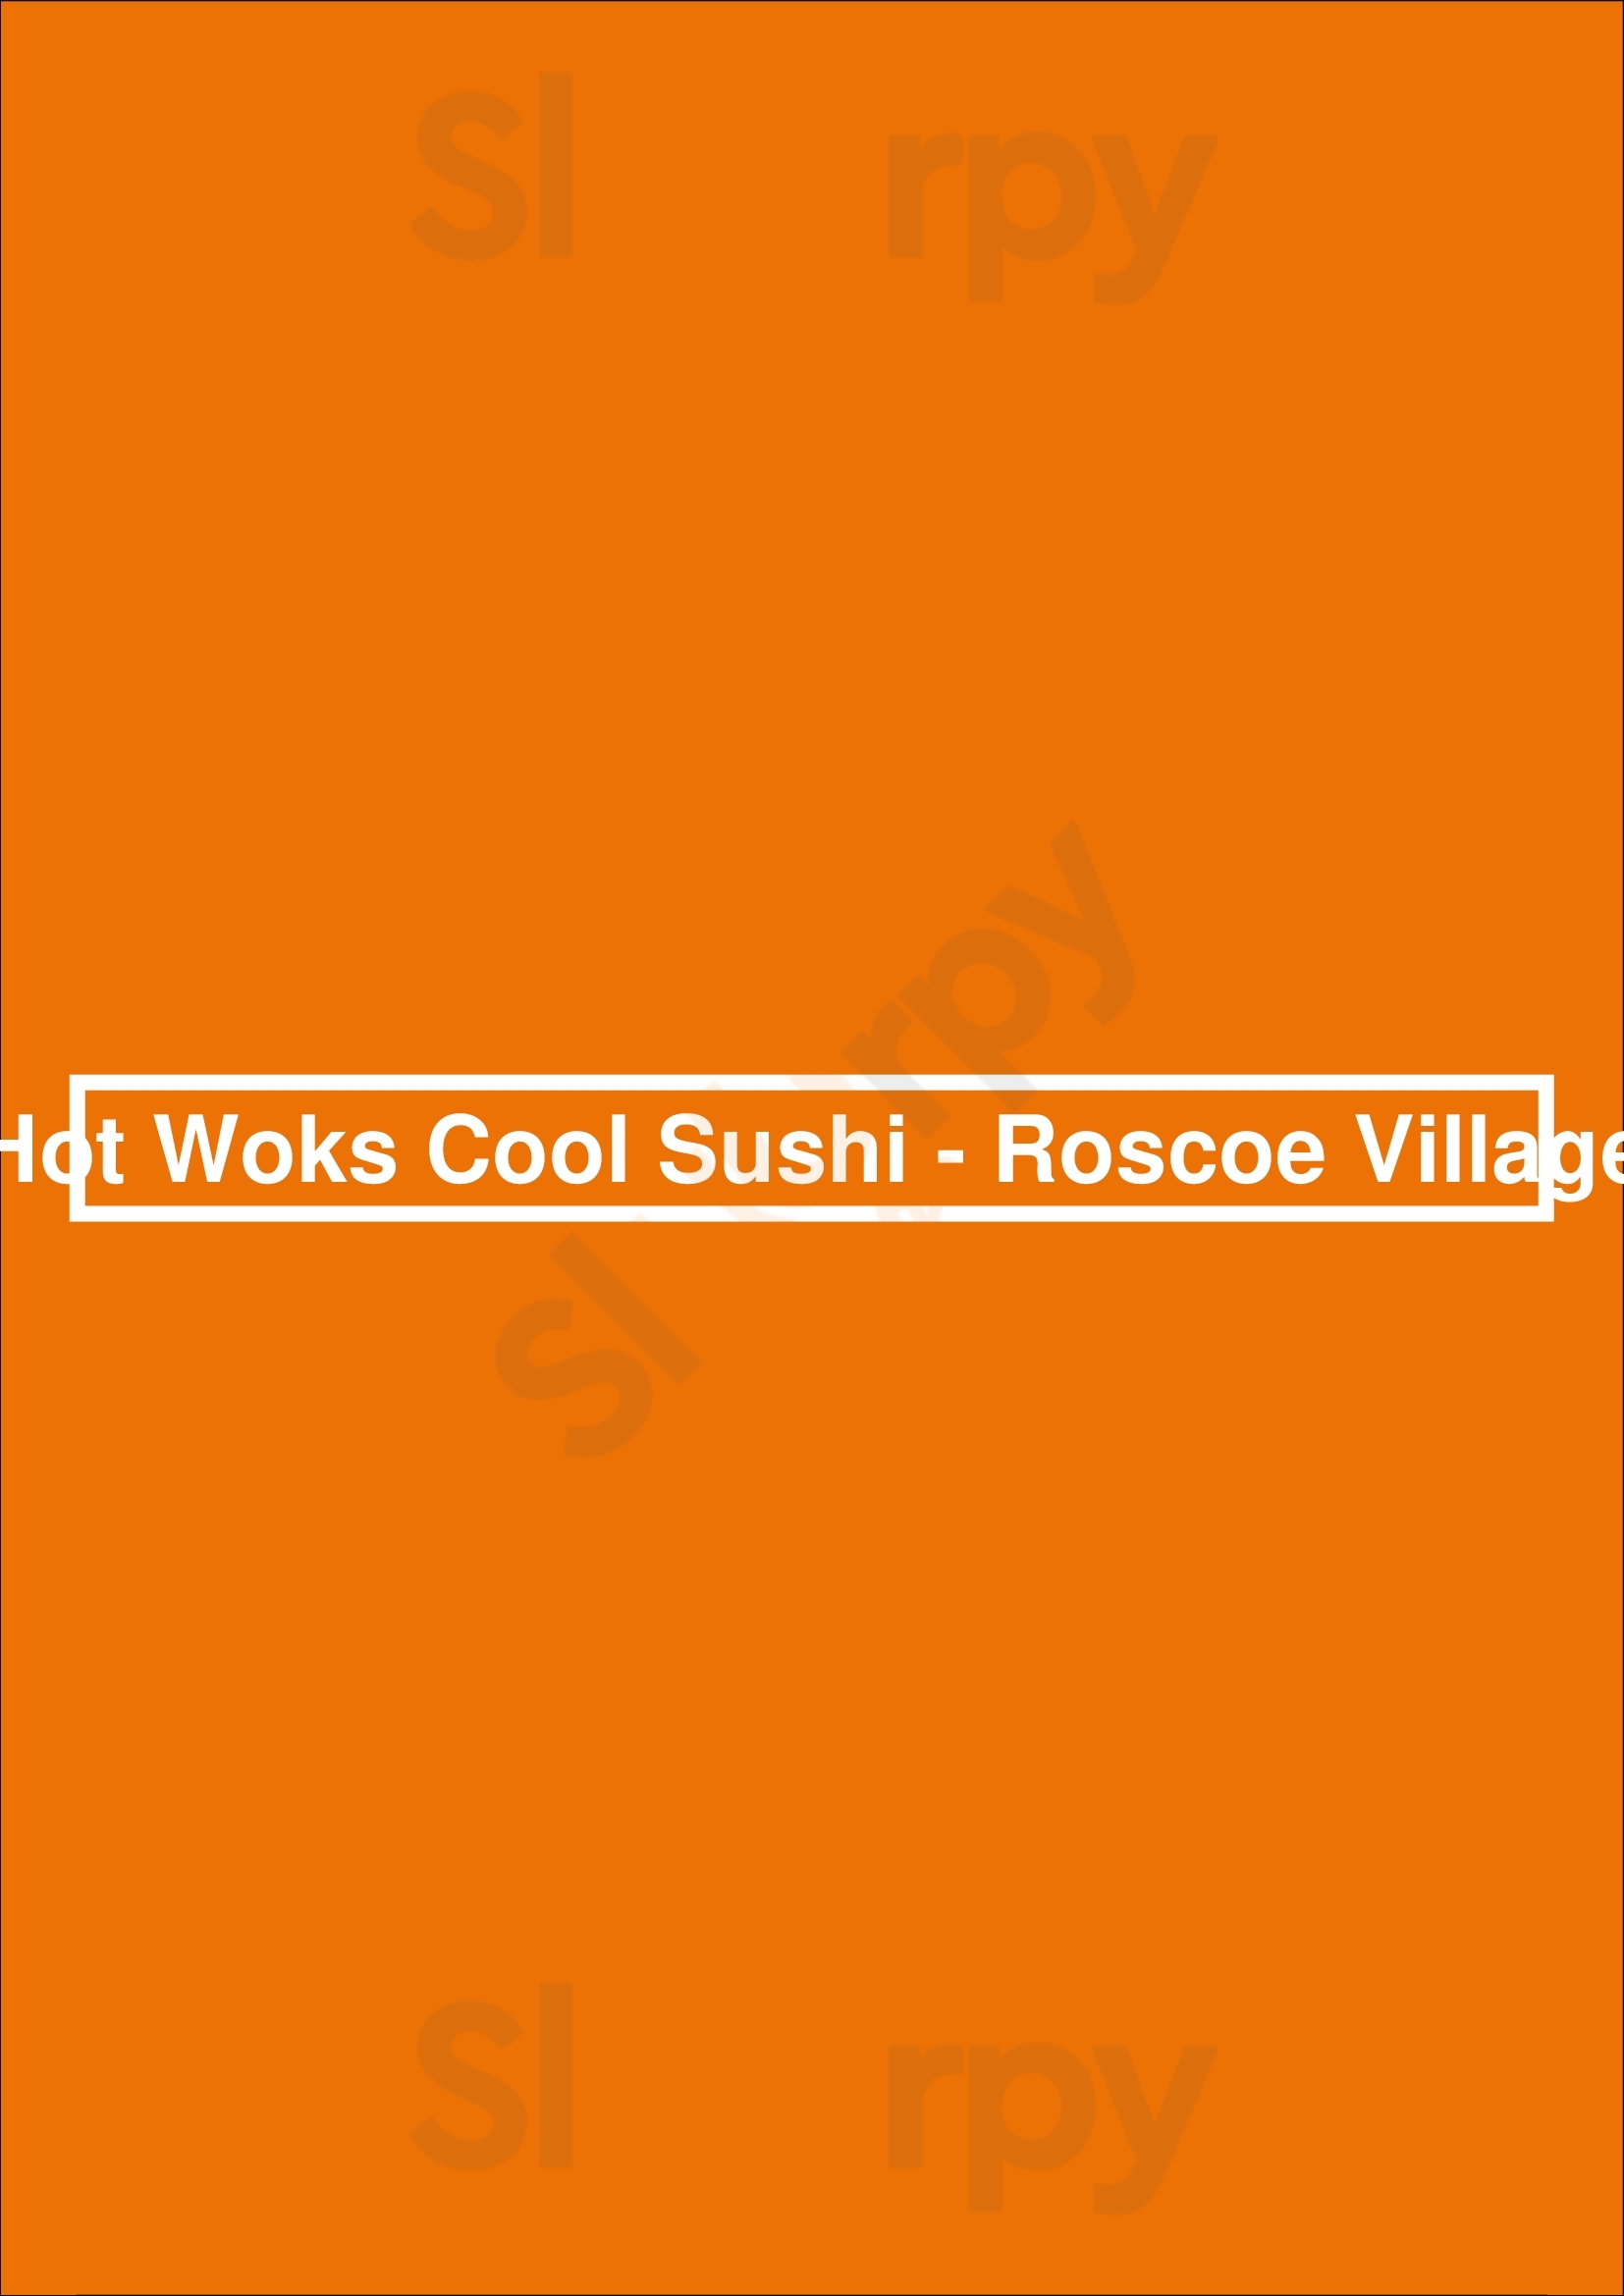 Hot Woks Cool Sushi - Roscoe Village Chicago Menu - 1